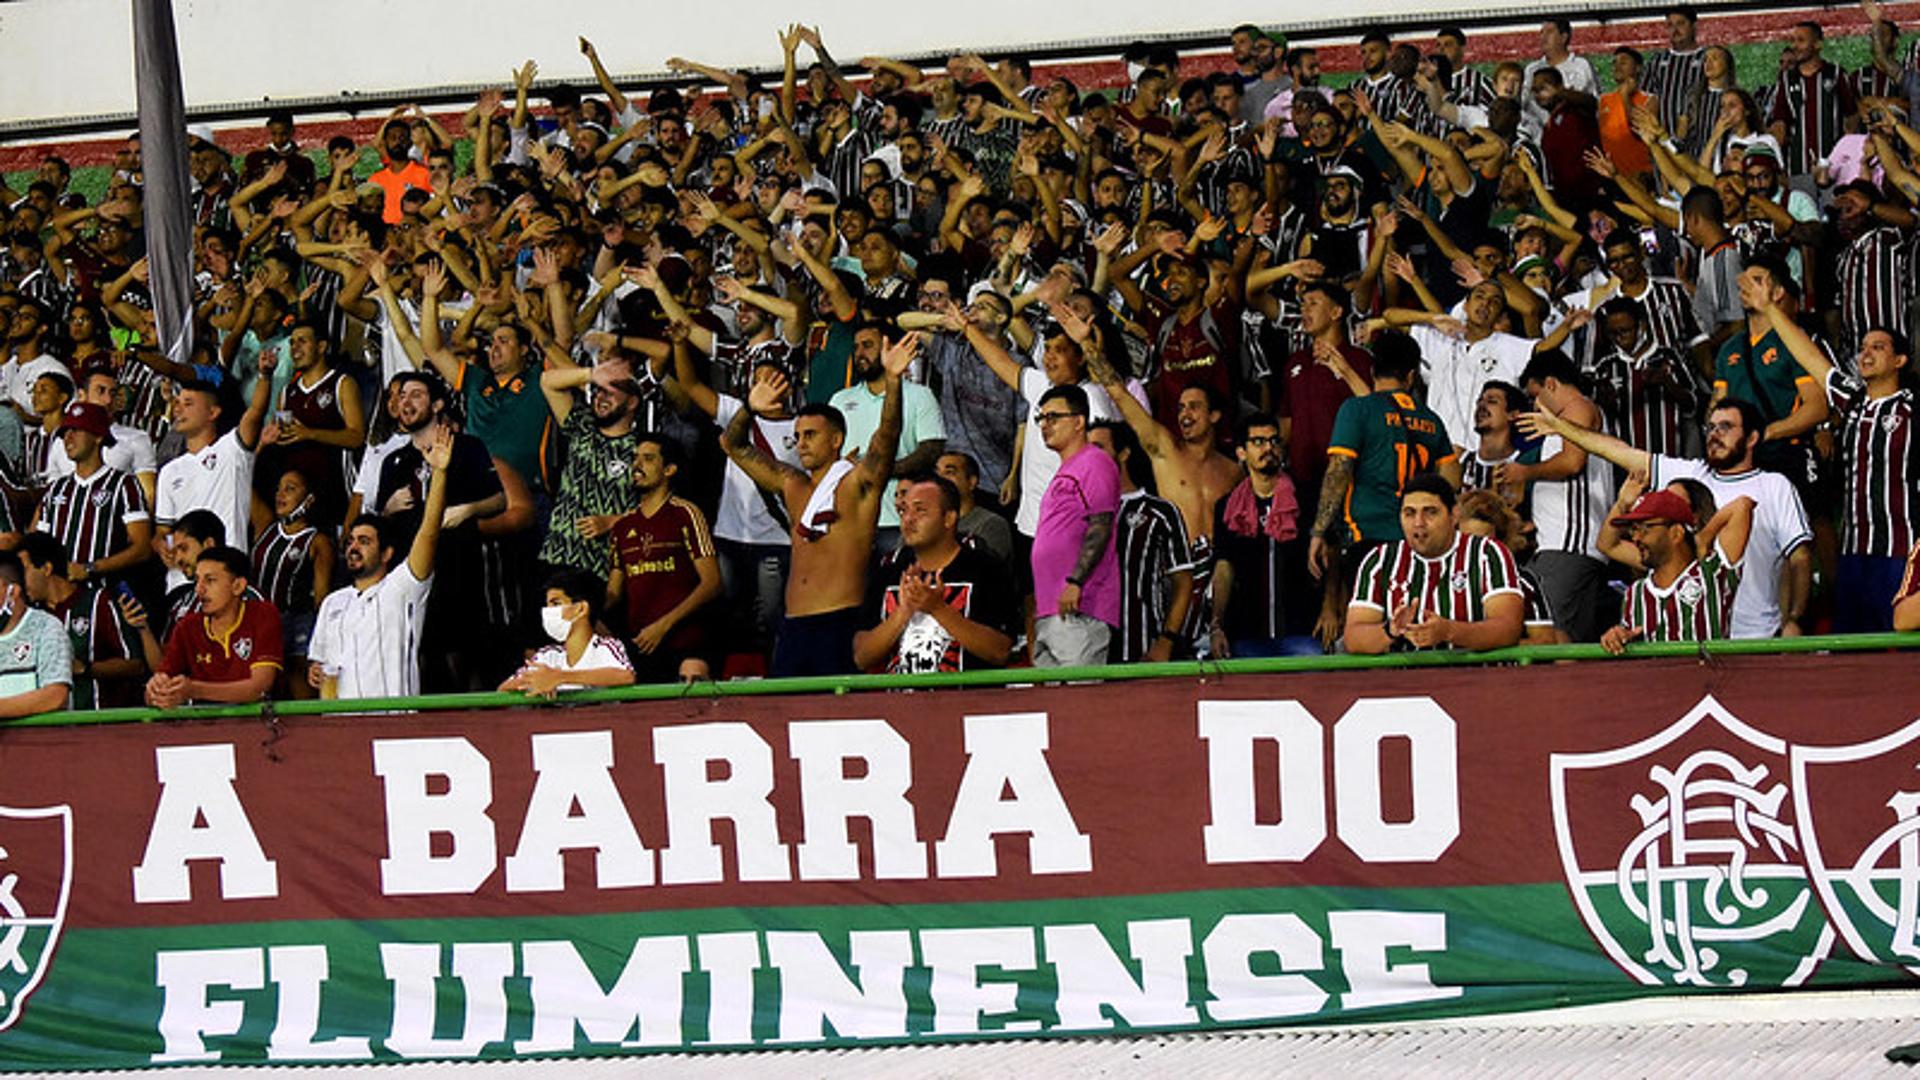 Fluminense x Audax - torcida